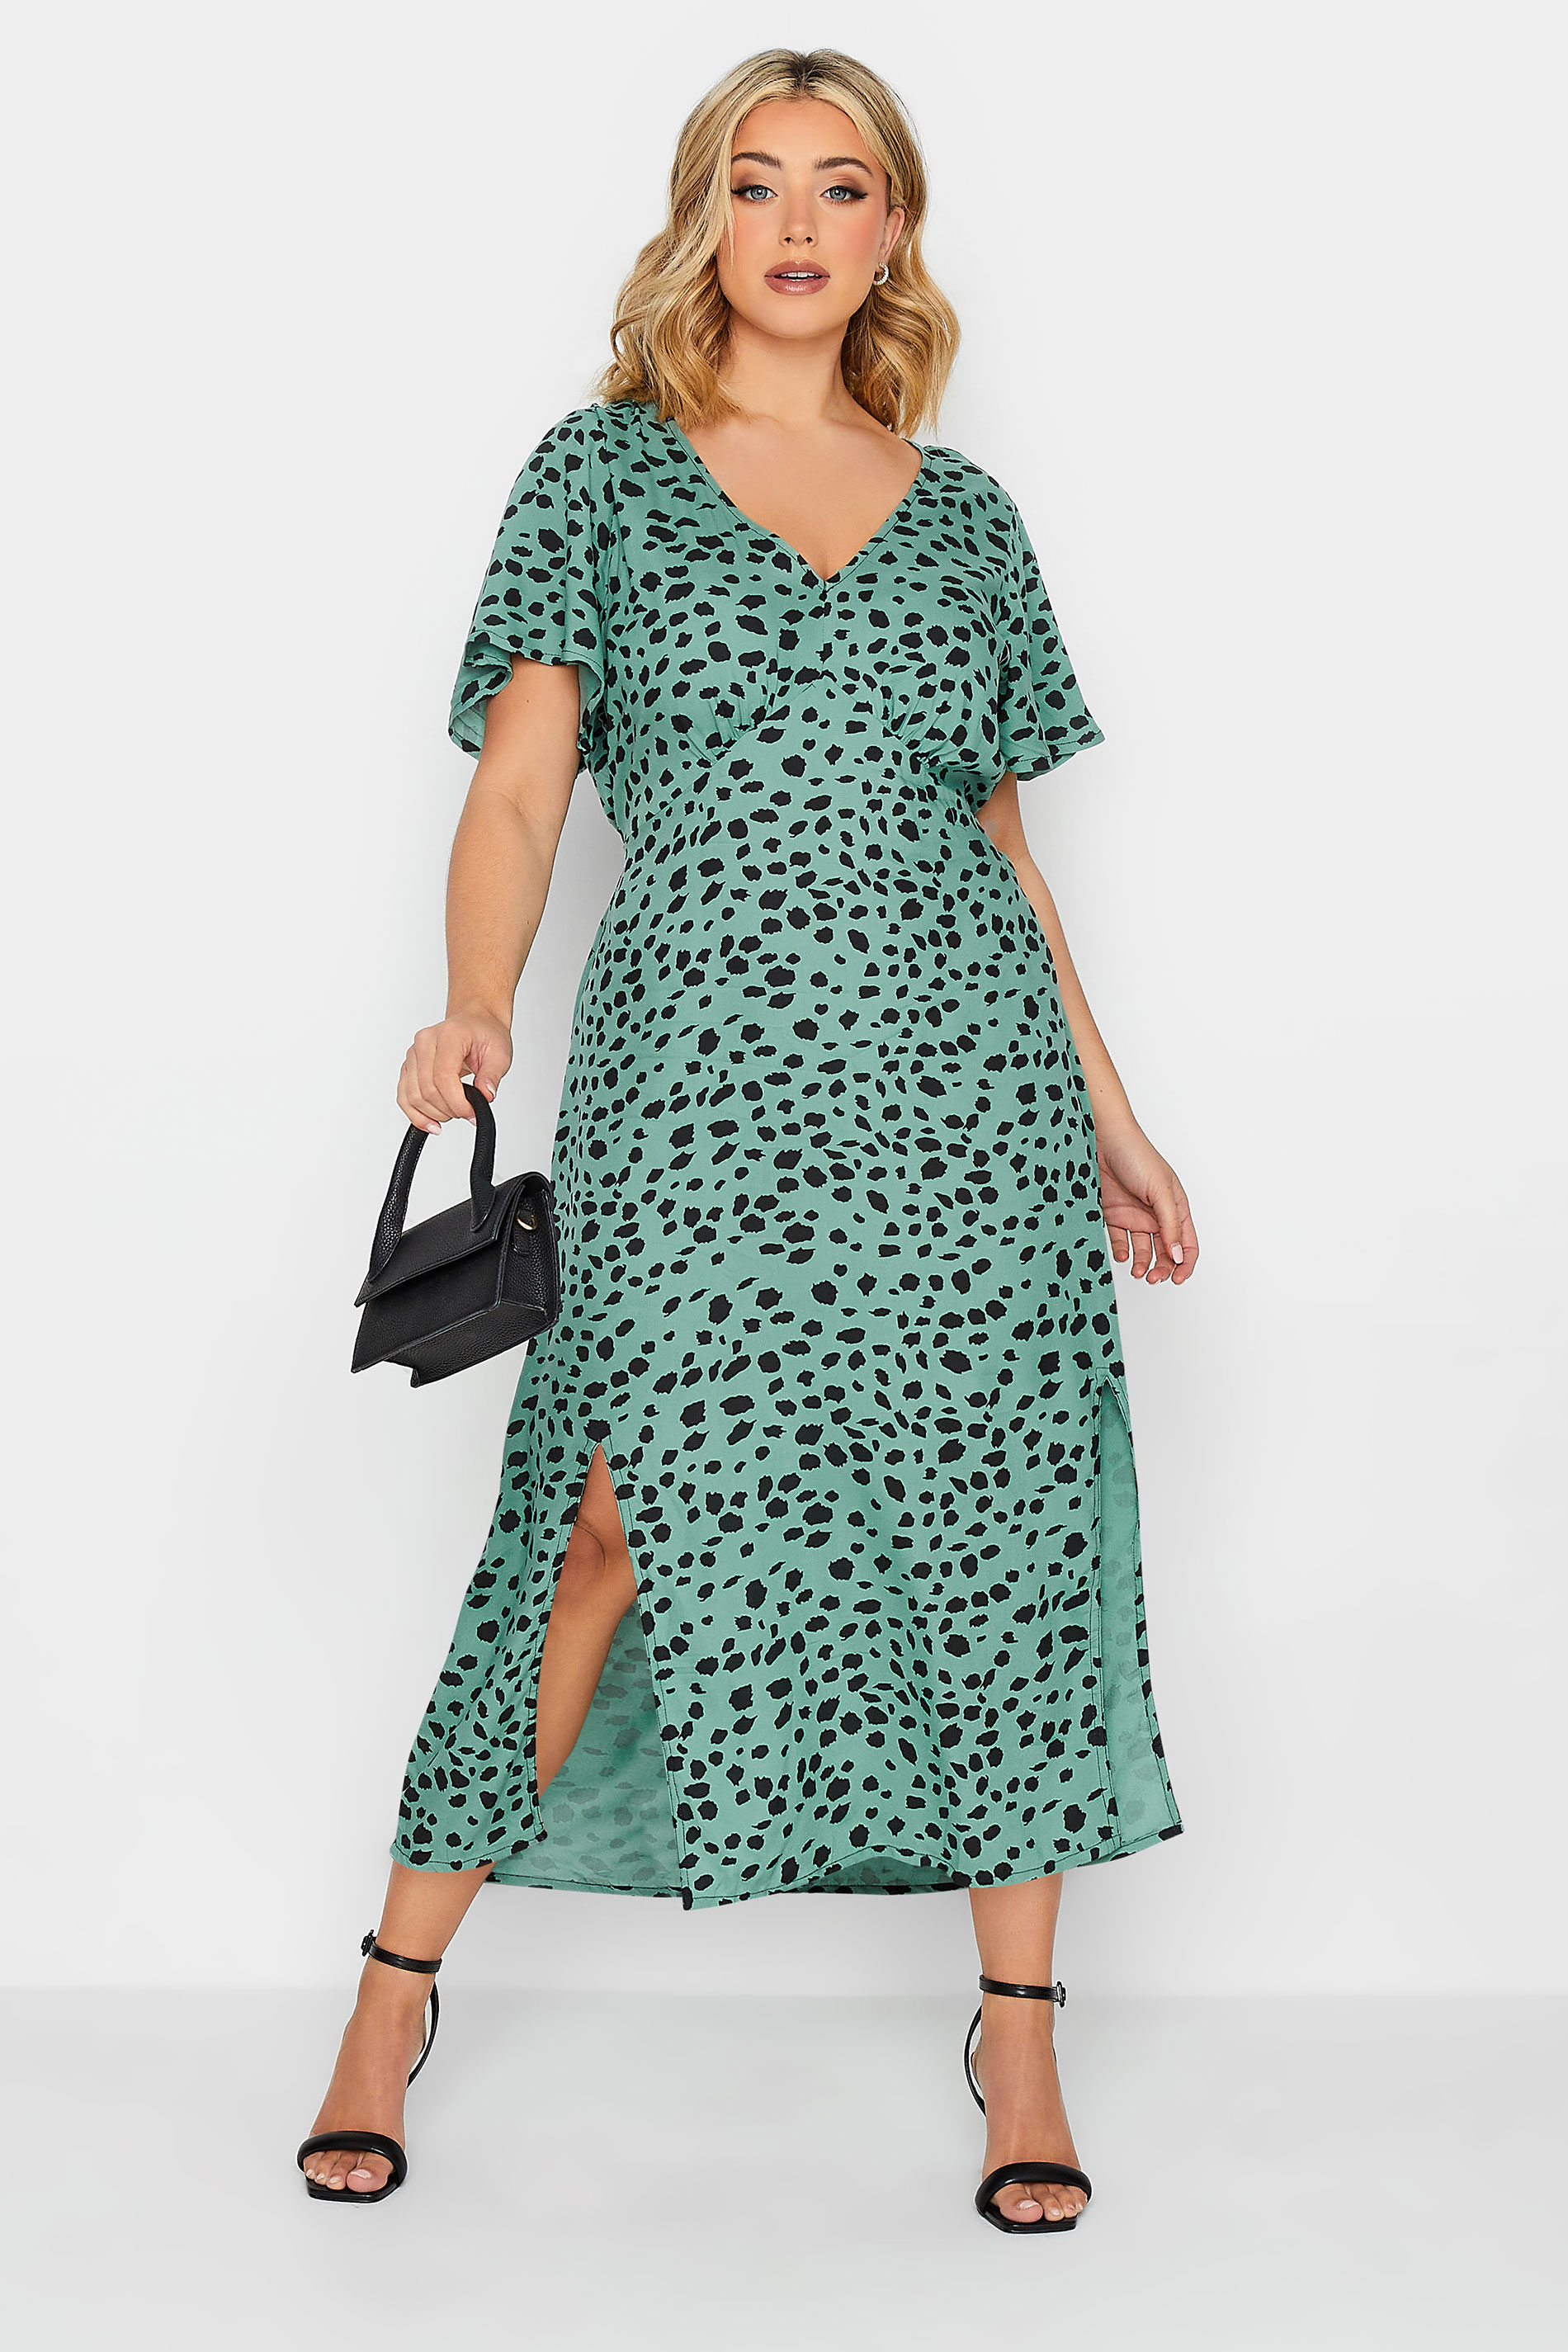 YOURS PETITE Plus Size Green Dalmatian Print Midi Tea Dress | Yours Clothing 1